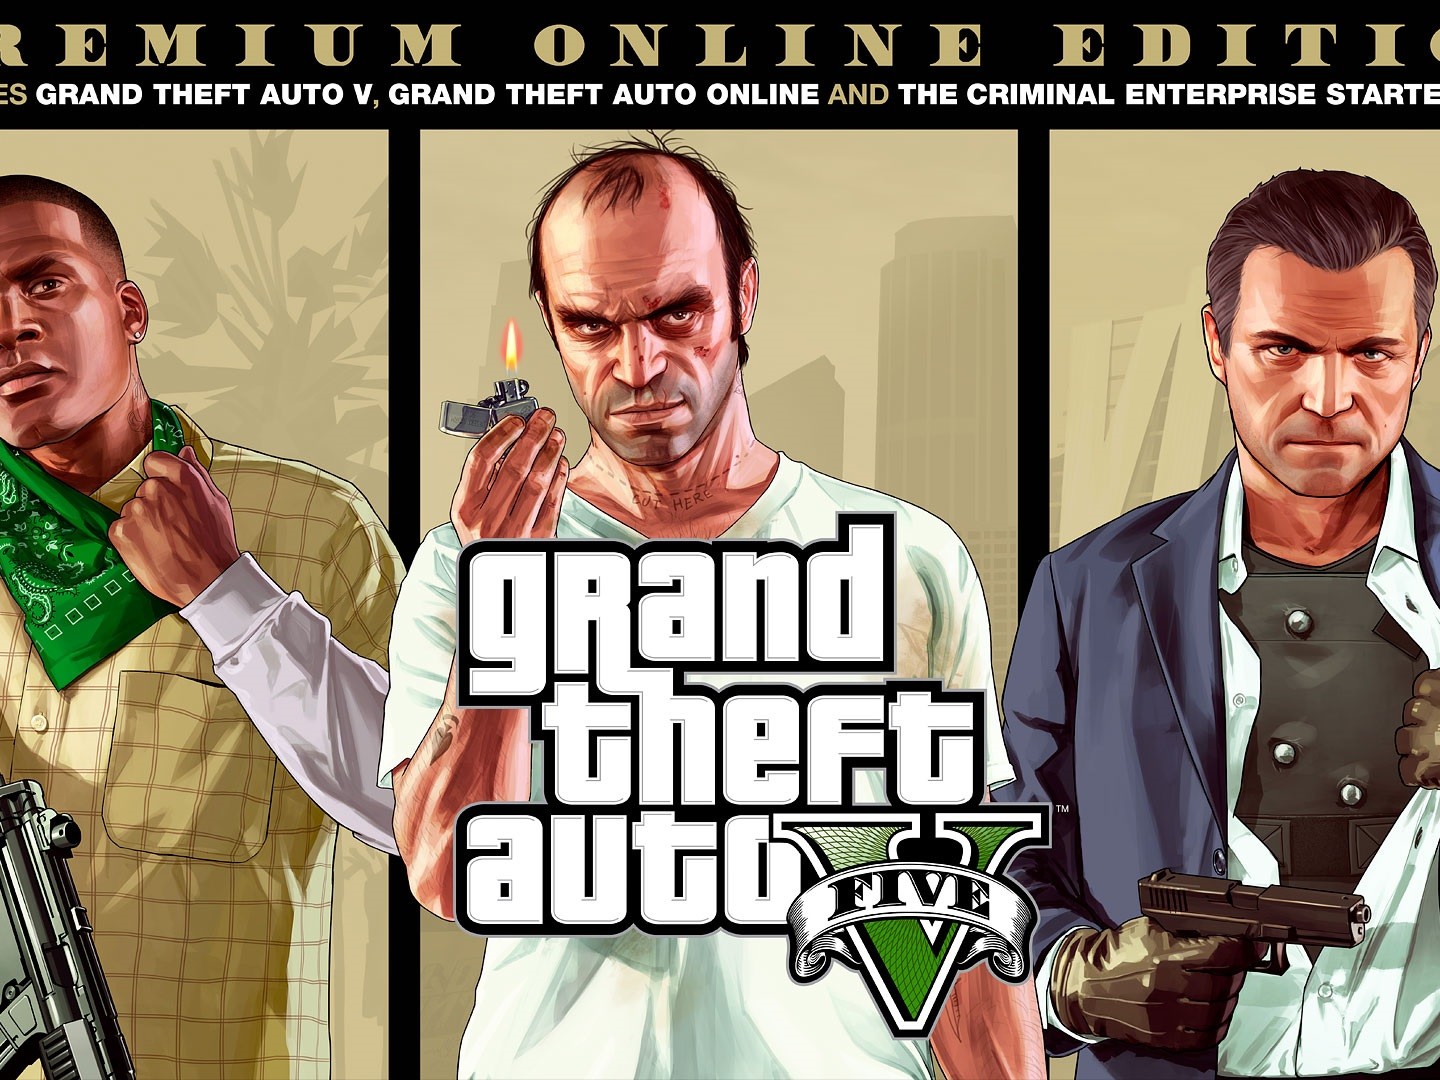 GTA V Premium Online Edition